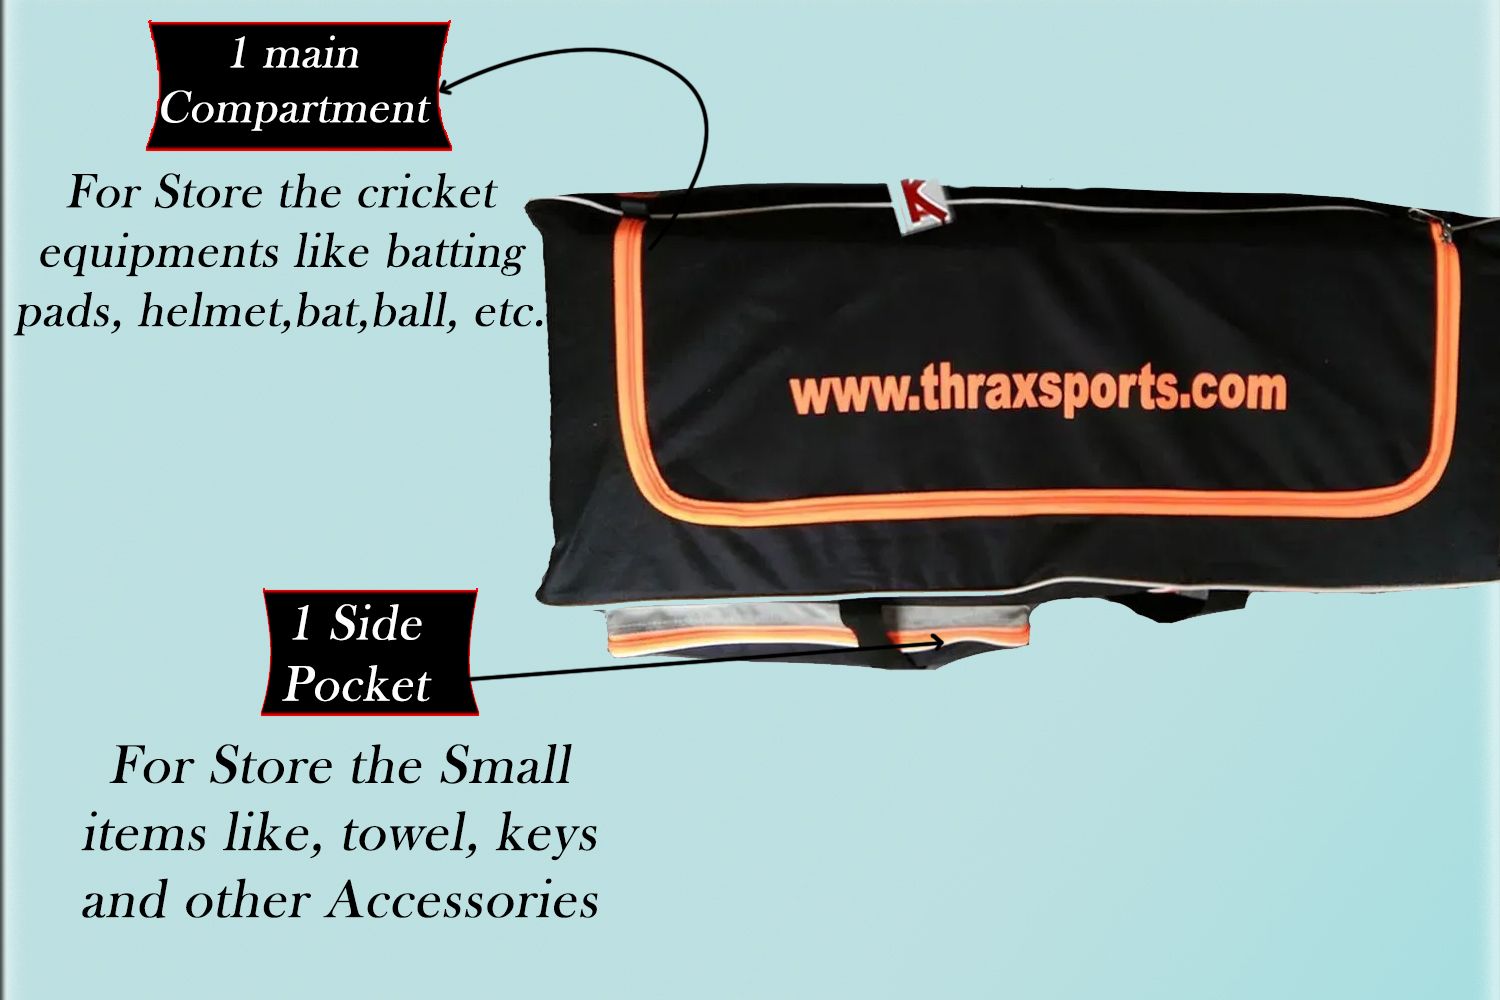 Thrax Proto 11 Wheel Cricket Kit Bag Black And Orange